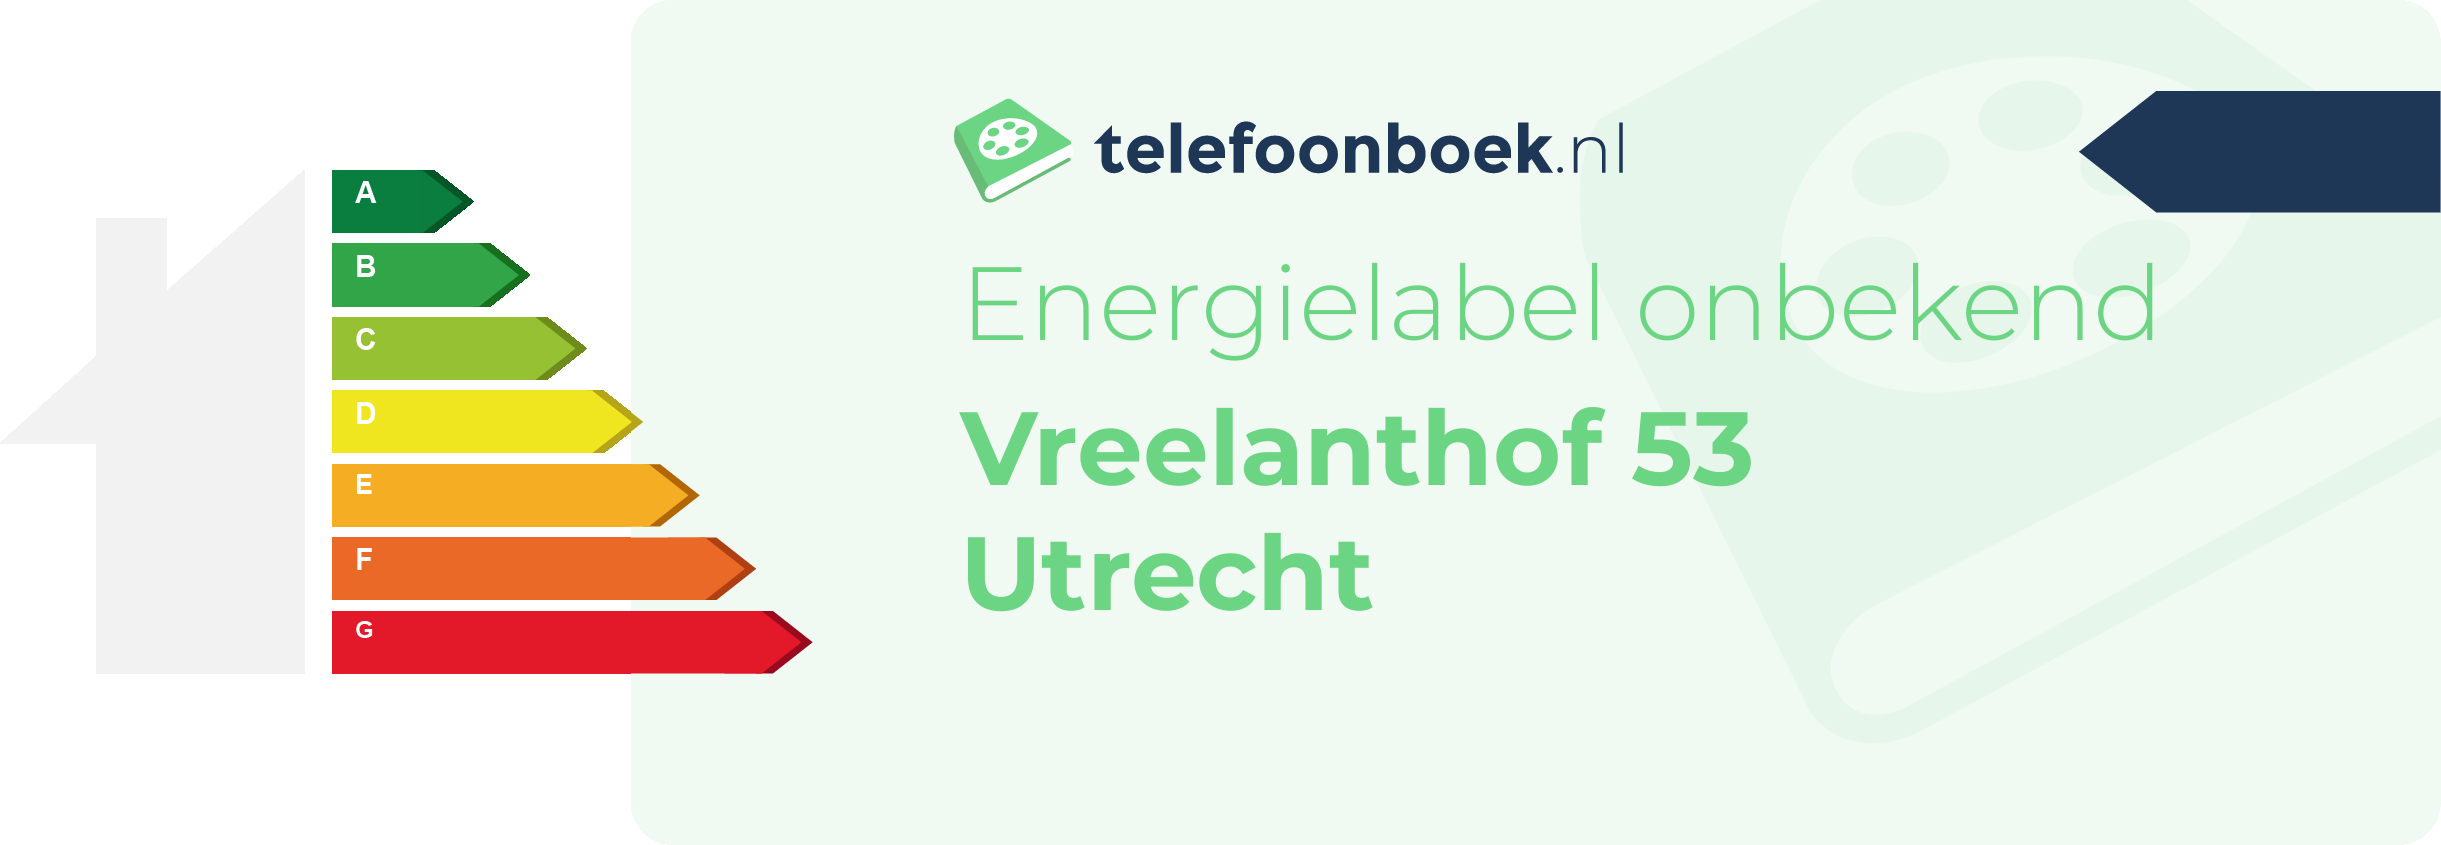 Energielabel Vreelanthof 53 Utrecht